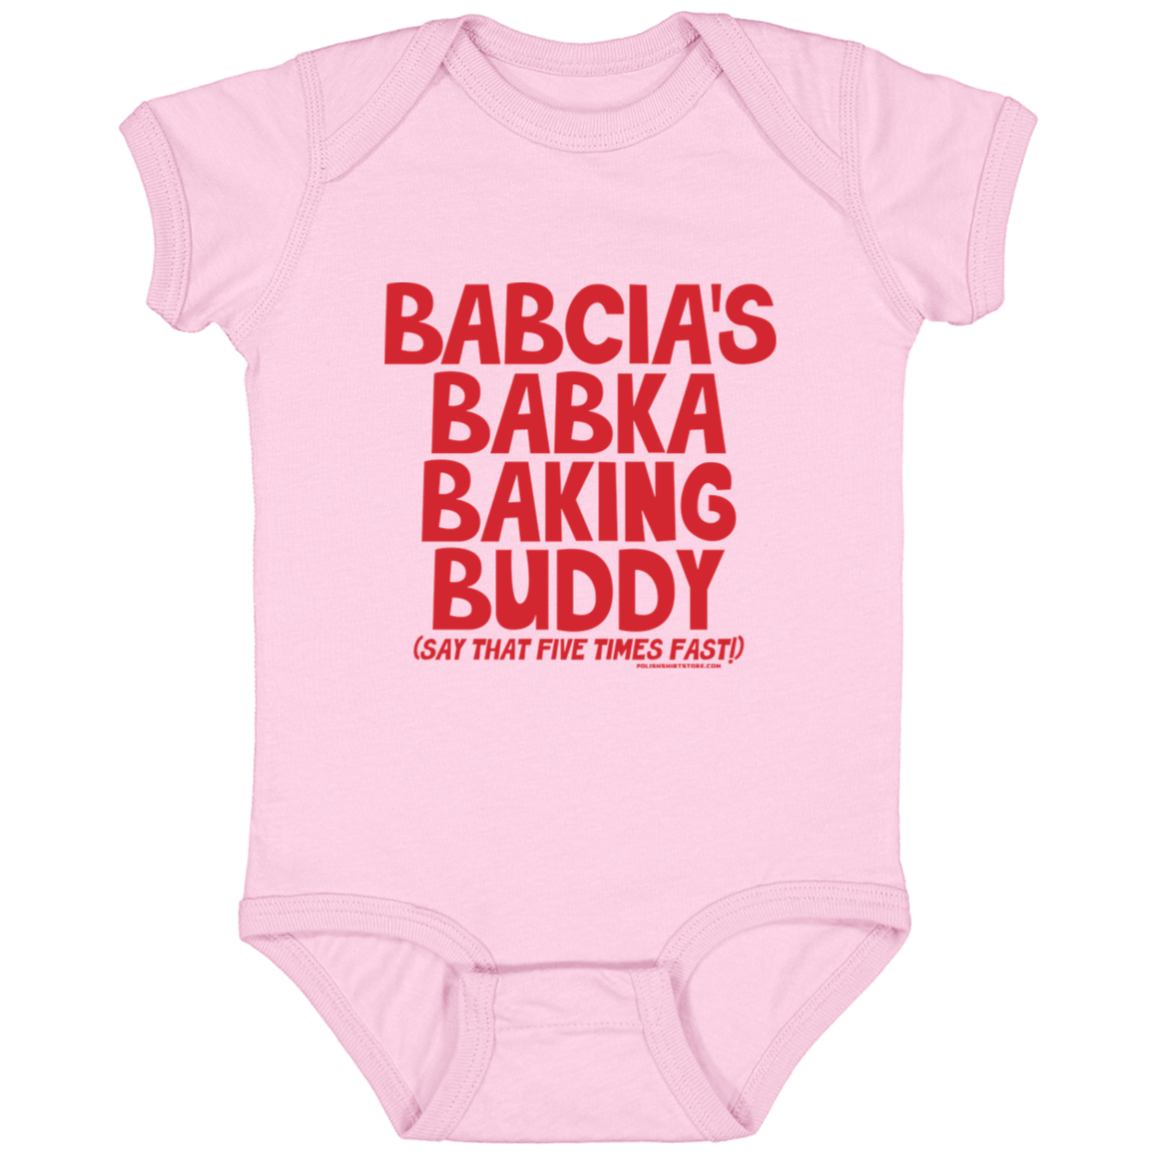 Babcia's Babka Baking Buddy Infant Bodysuit Baby CustomCat Pink Newborn 